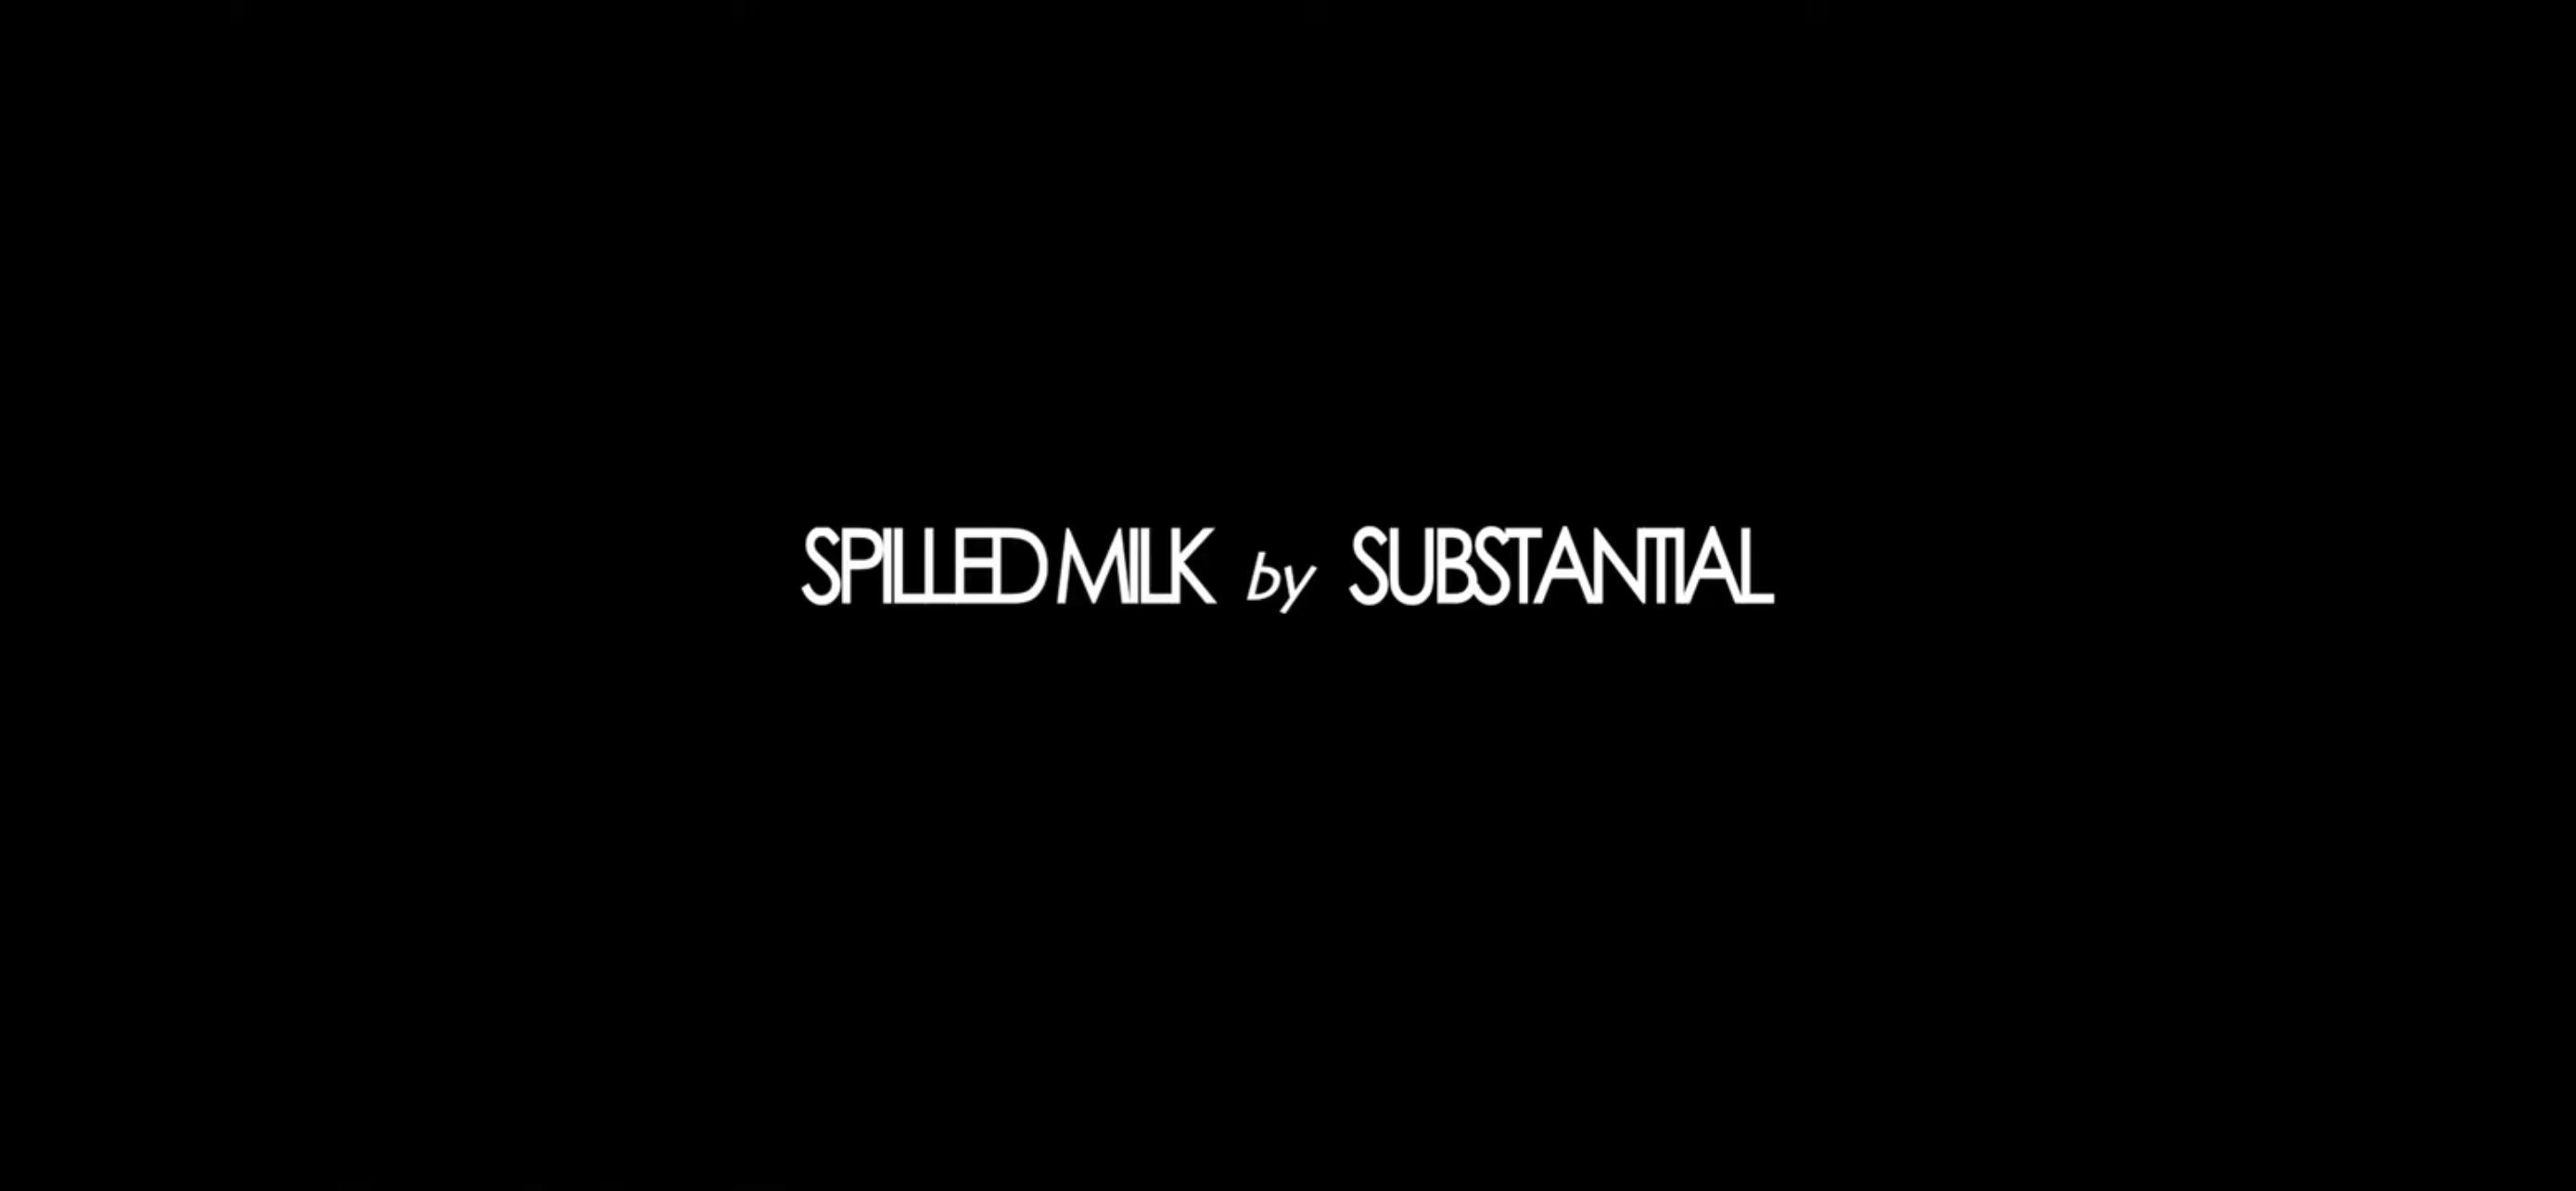 Substantial - Spilled Milk [Music Video]